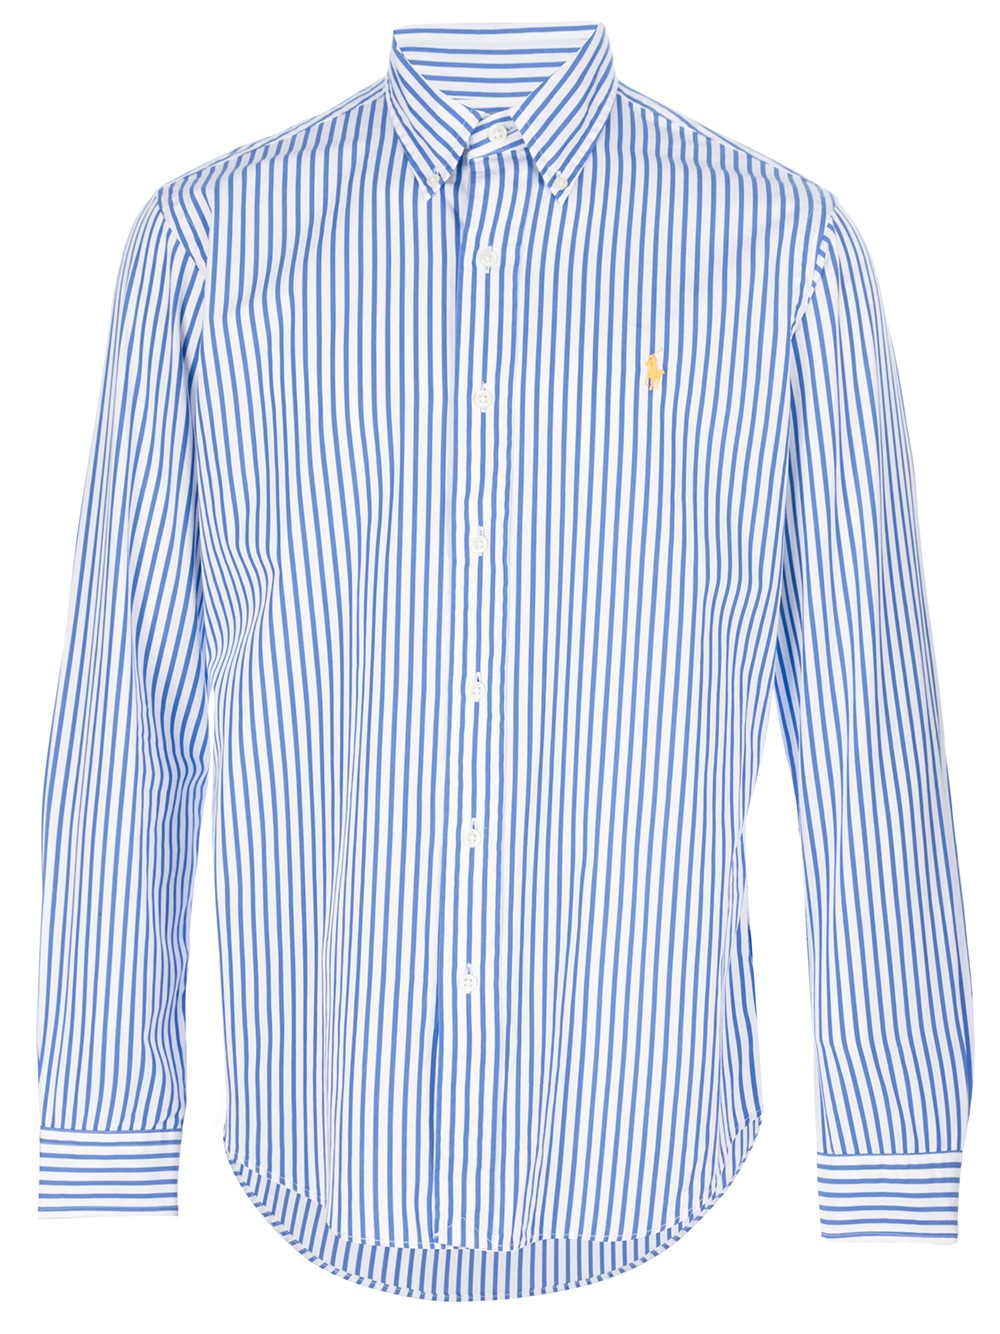 Lyst - Polo Ralph Lauren Striped Shirt in Blue for Men